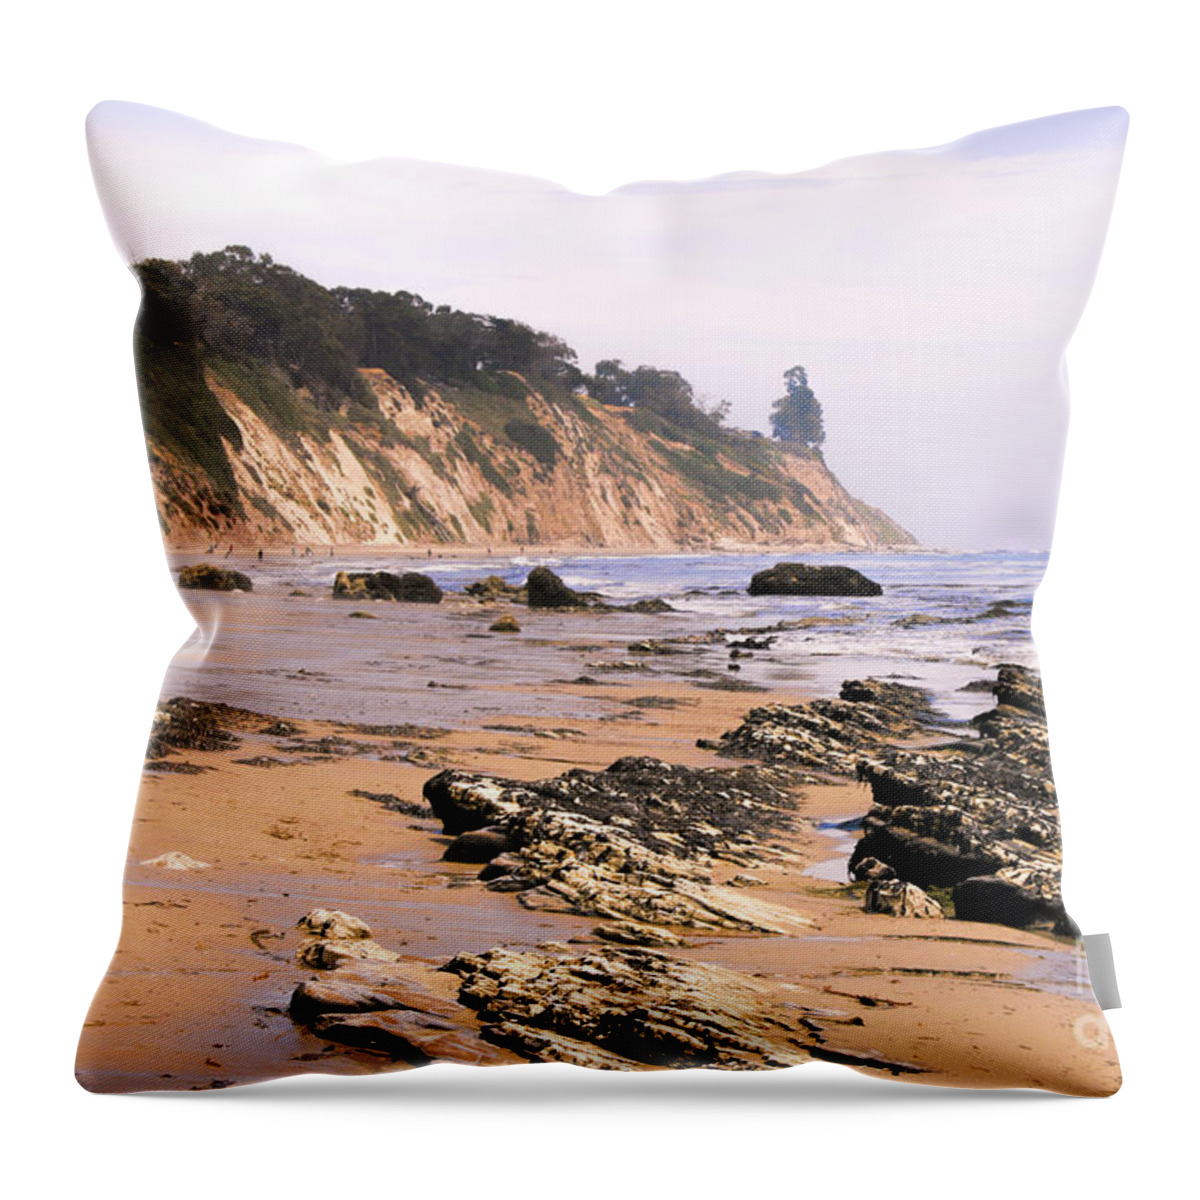 Santa Barbara Throw Pillow featuring the photograph Henry's Beach by Richard Lynch